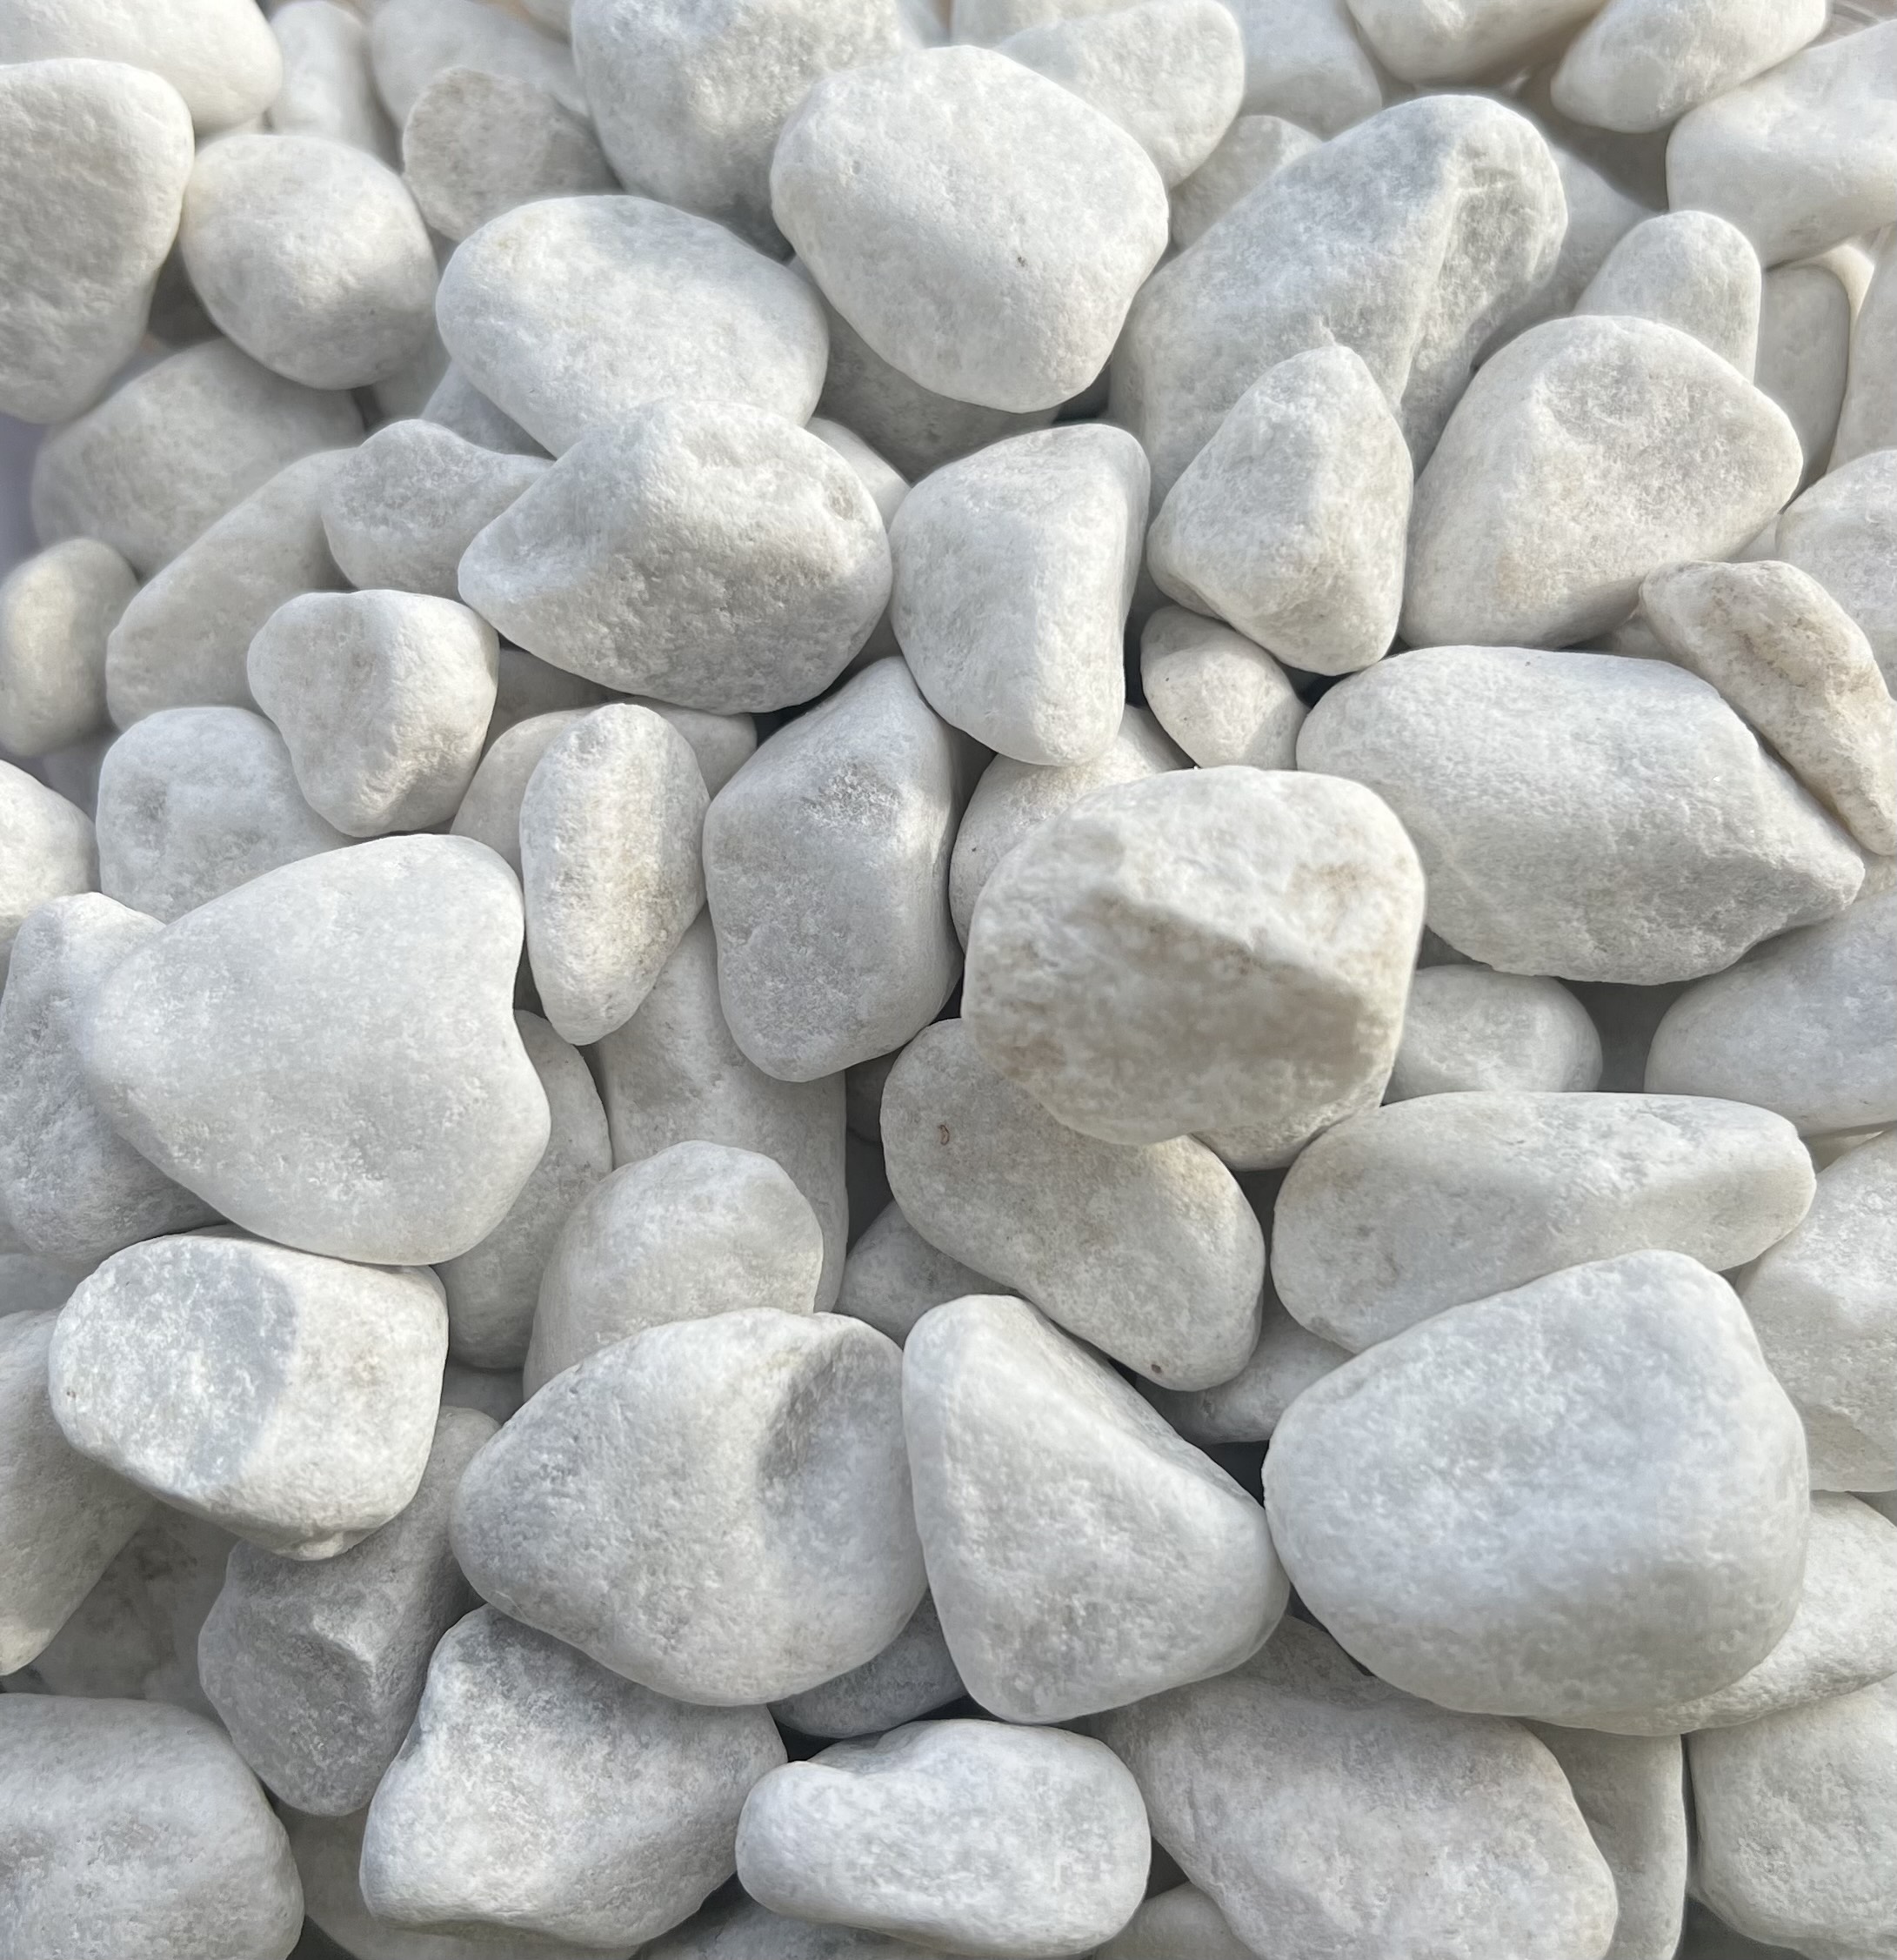 Gravier Calcaire Blanc : vrac ou big bag